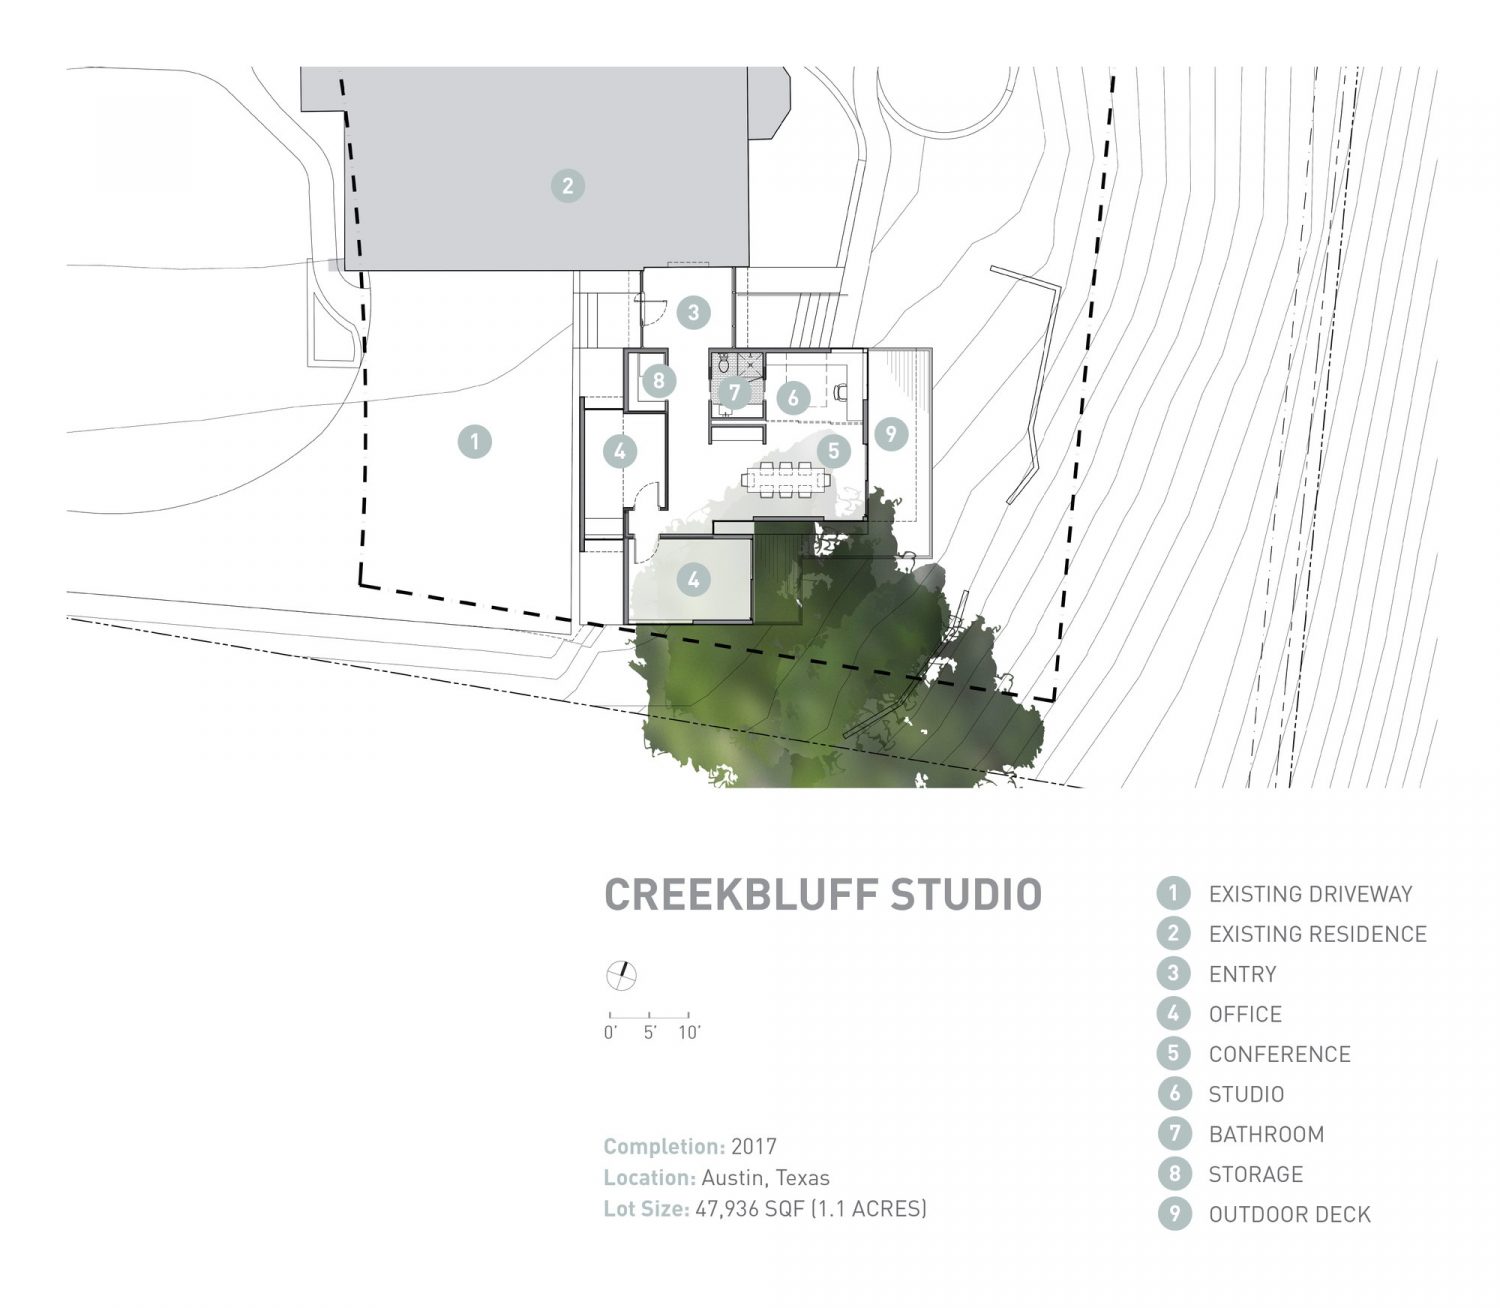 Creekbluff Studio by Matt Fajkus Architecture